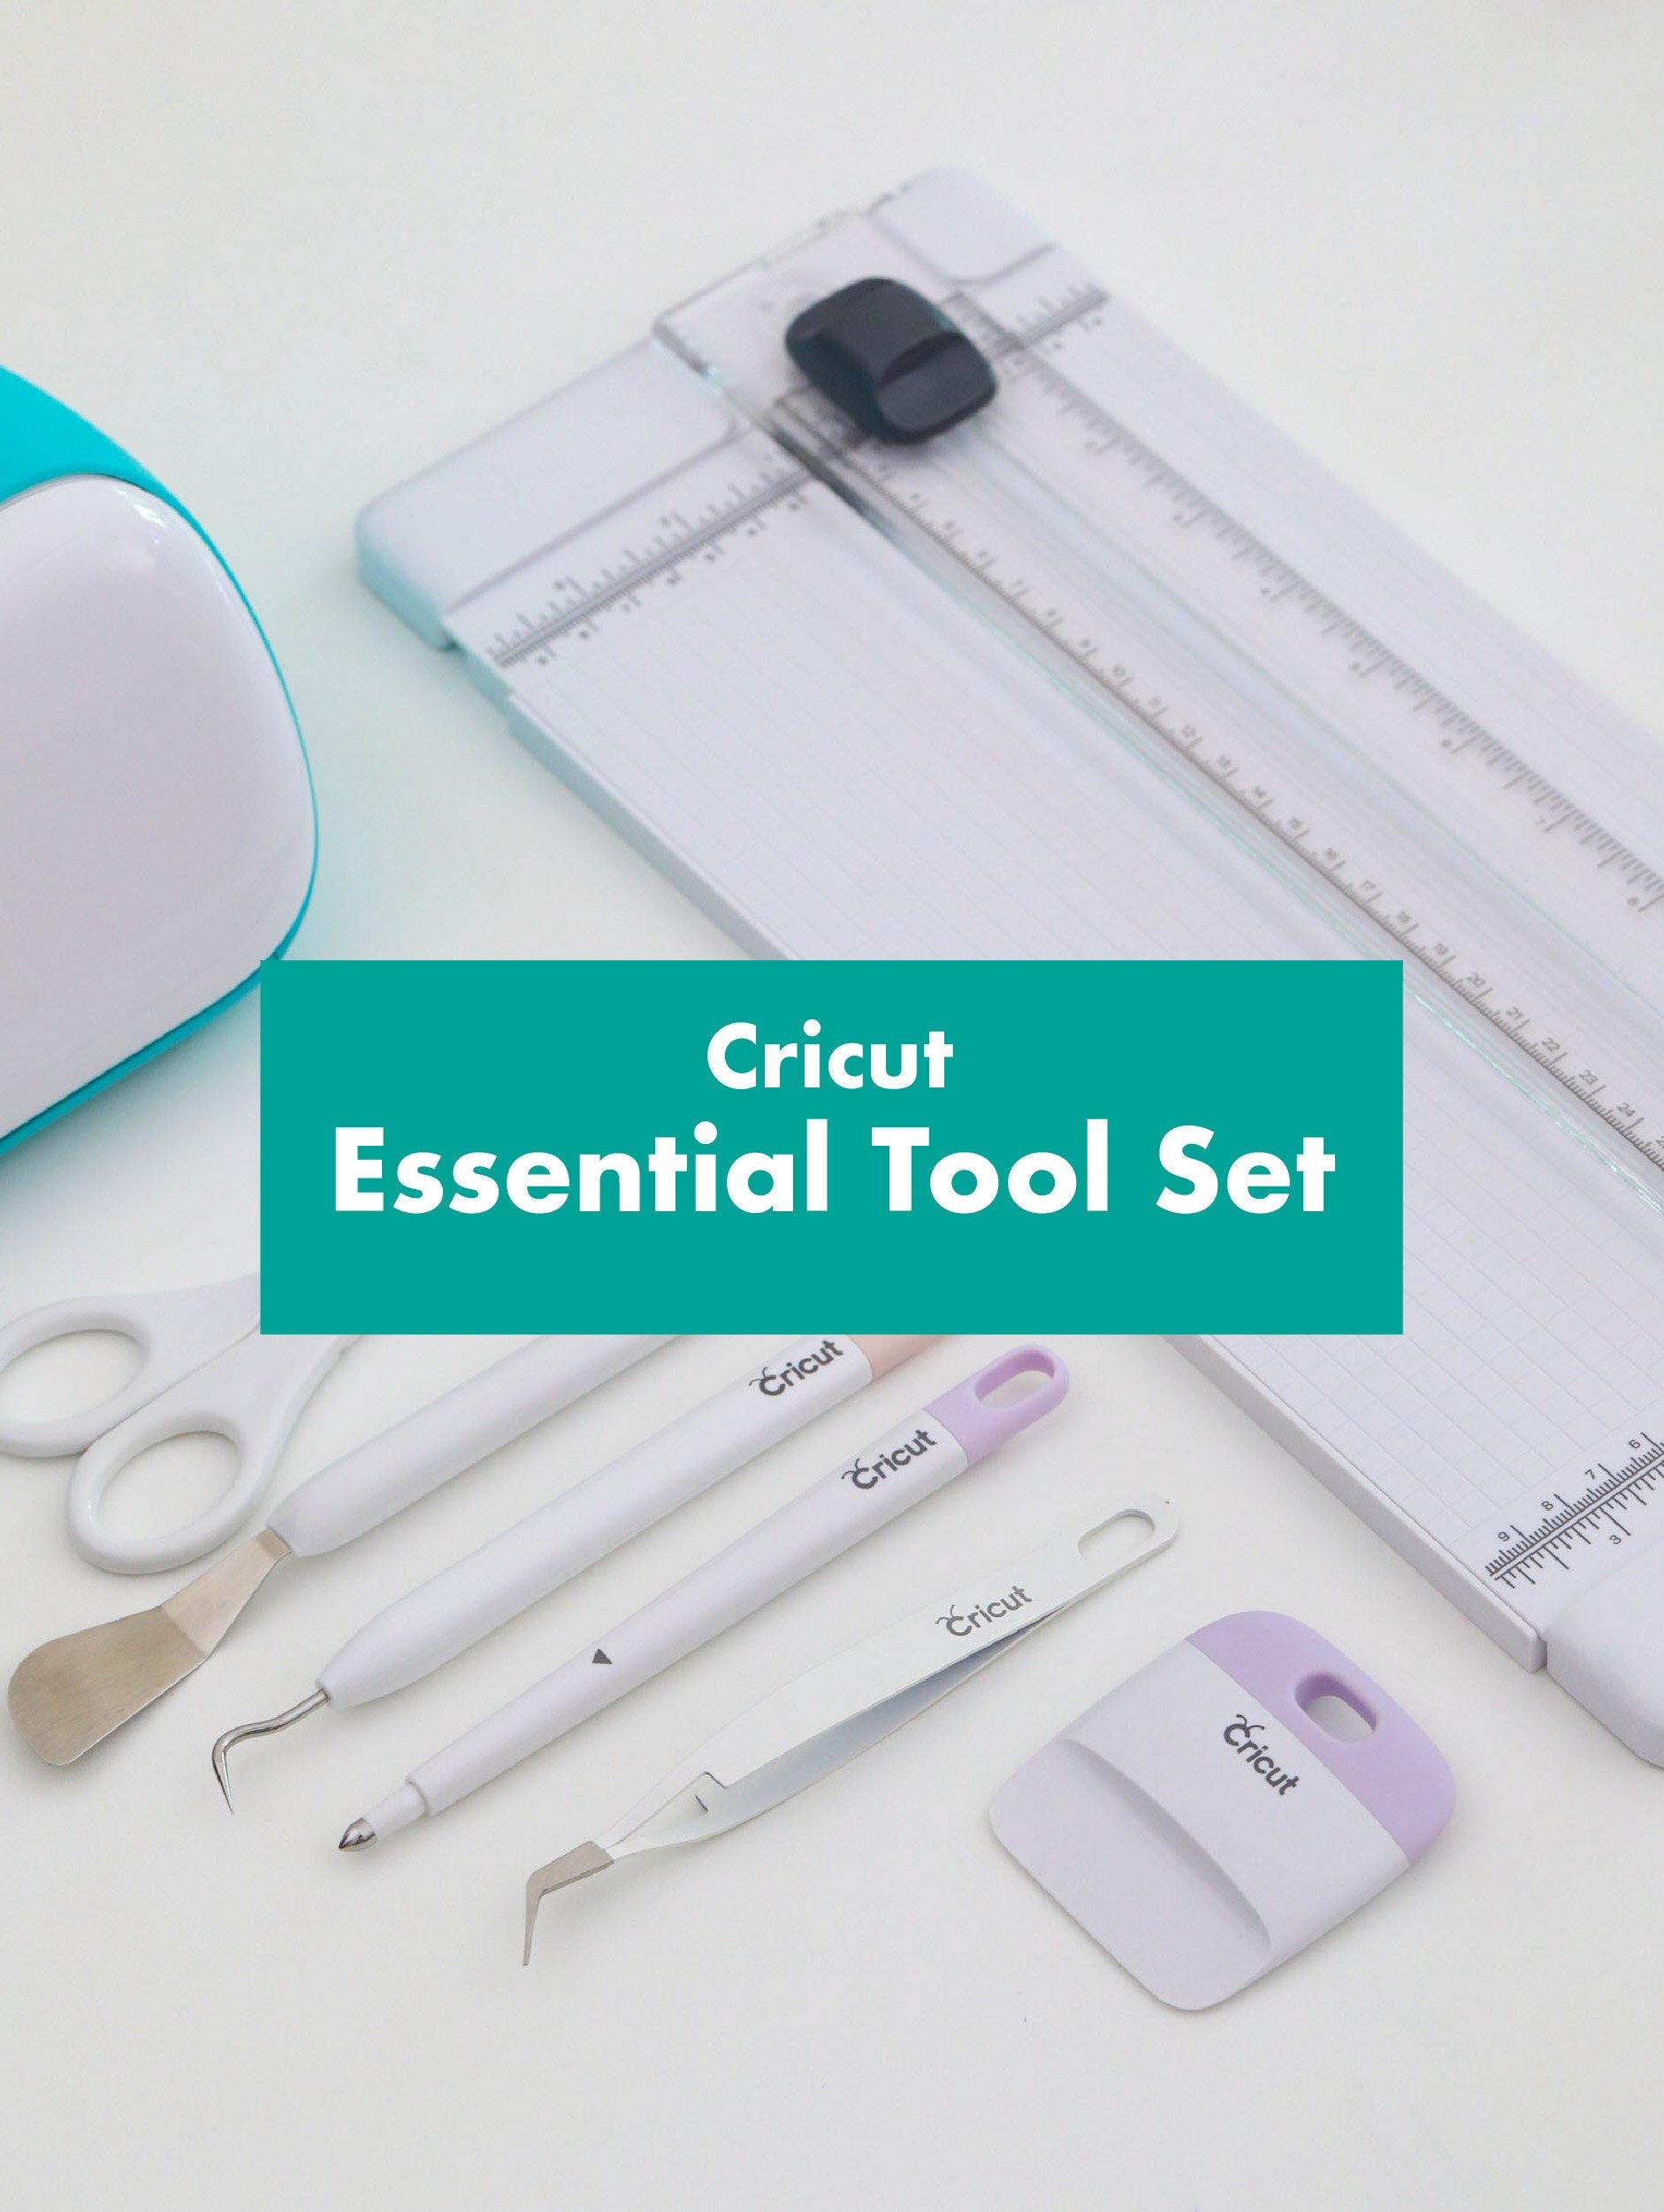 Cricut Essential Tool Set